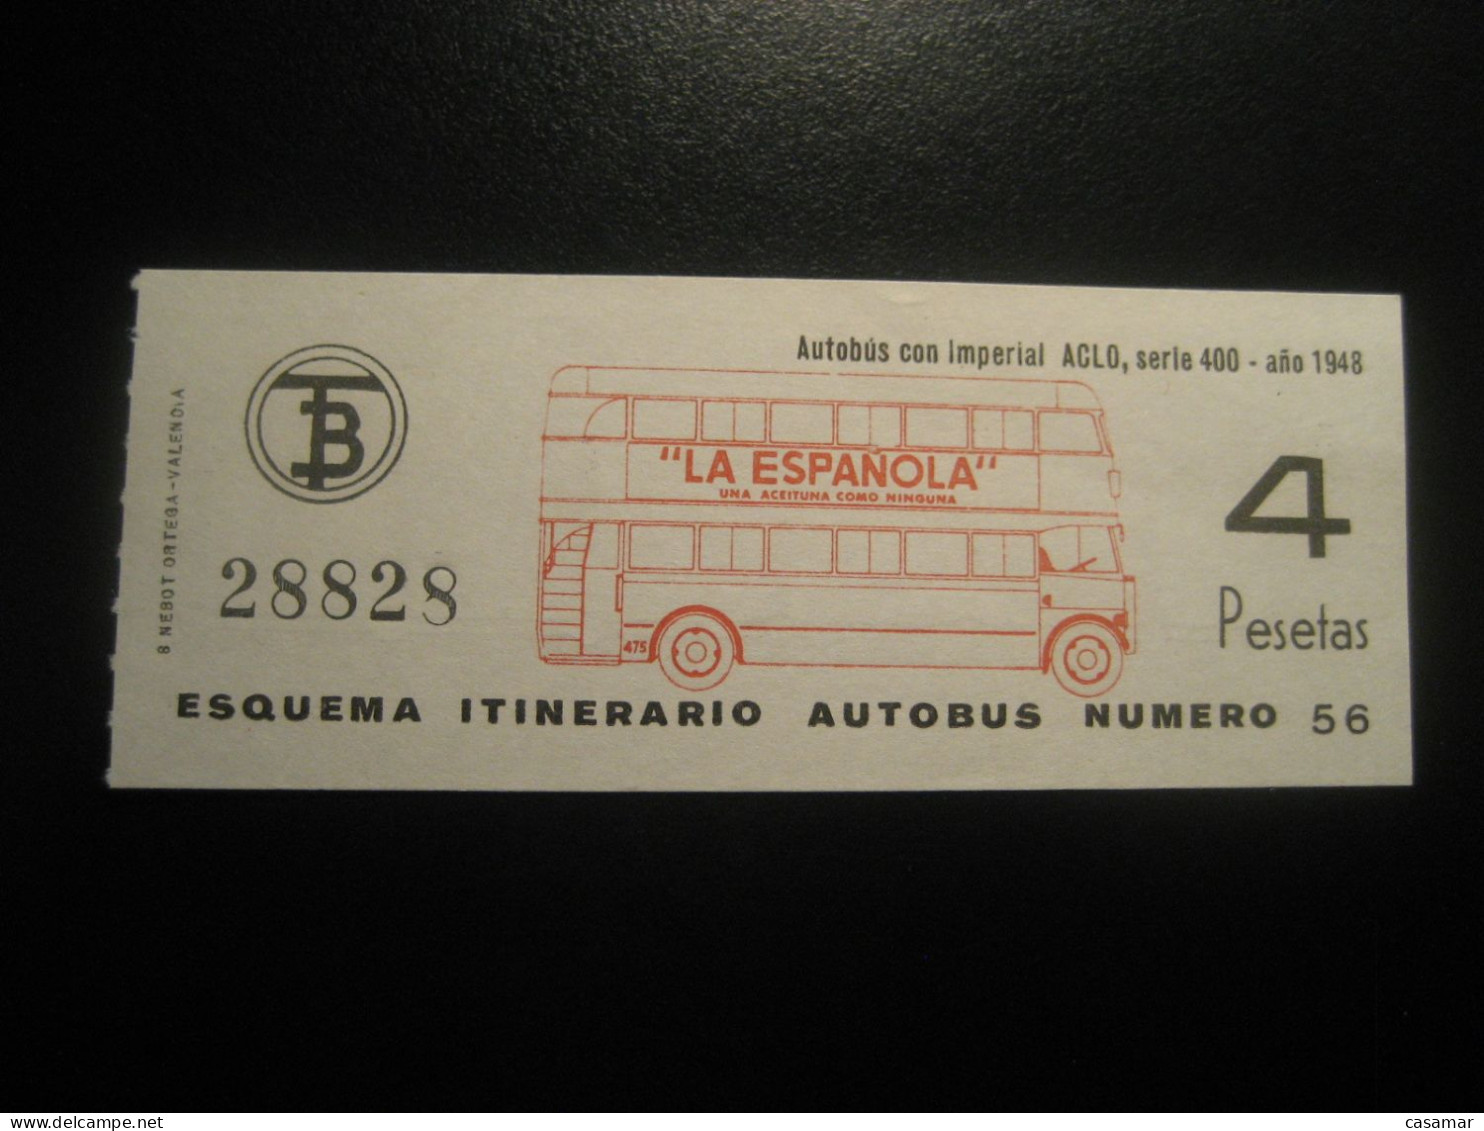 Barcelona Autobus Numero 65 "LA ESPAÑOLA" Advertise Transport Bus Tramway Tram Ticket Spain - Bus